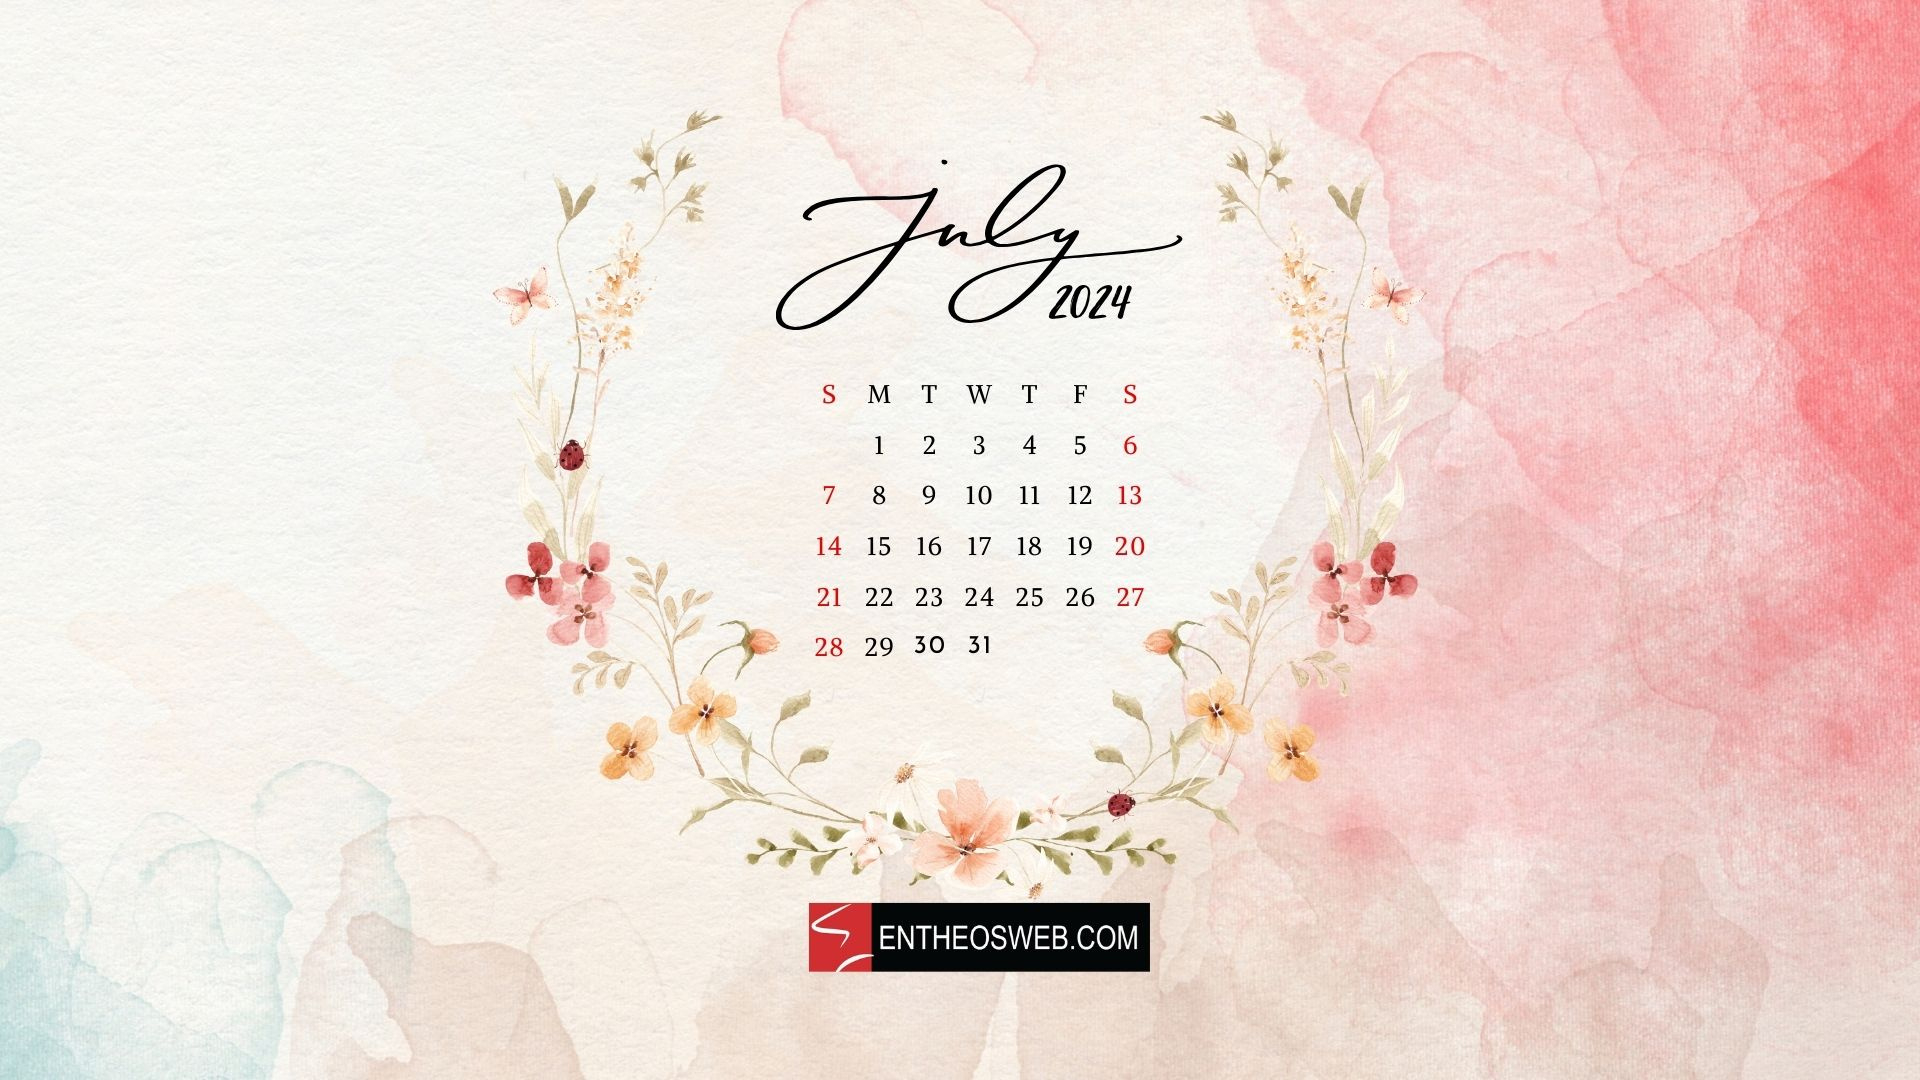 July 2024 Desktop Wallpaper Calendar | Entheosweb intended for July 2024 Background Calendar